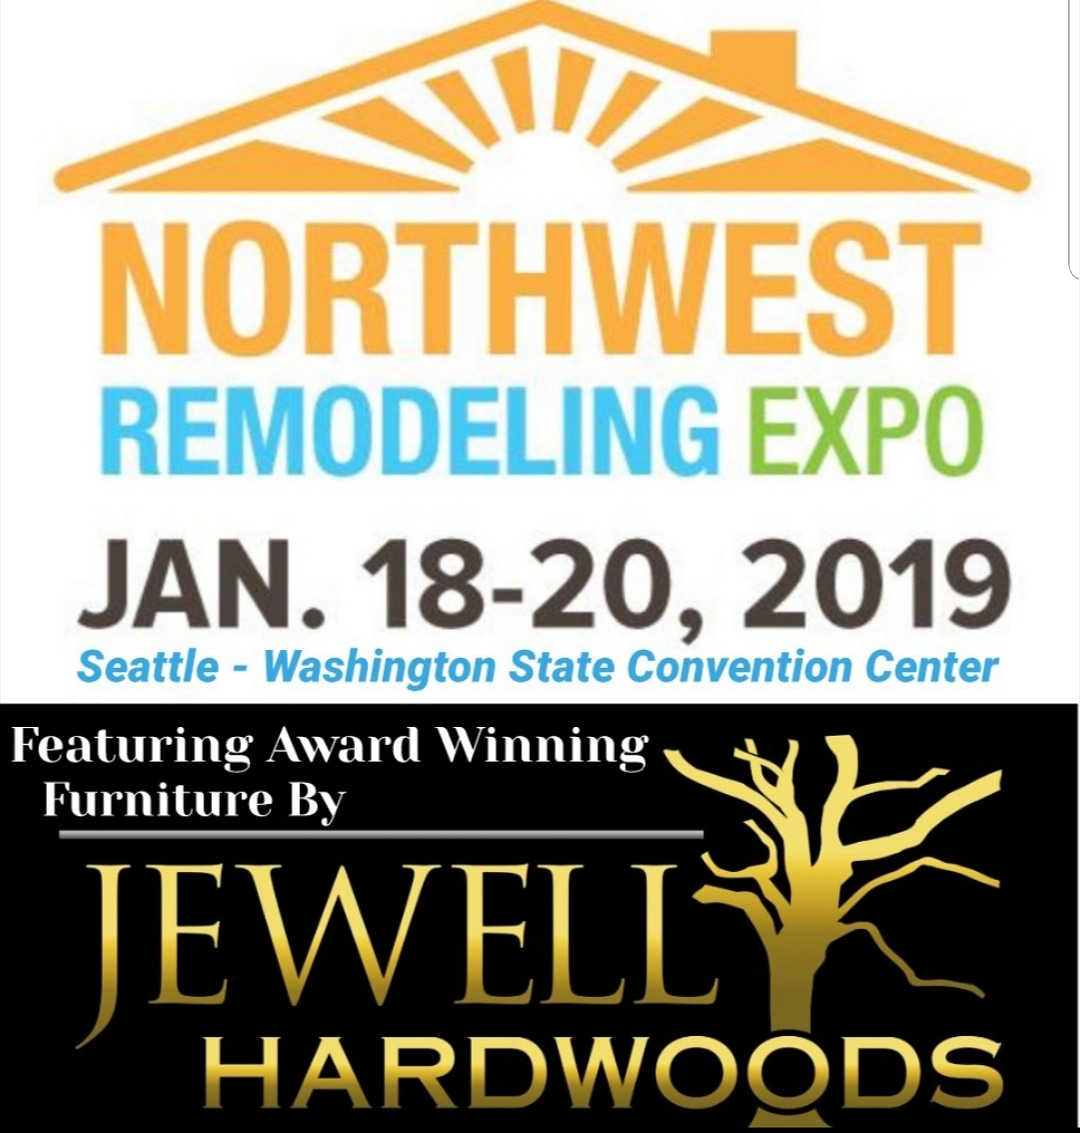 Seattle NW Remodeling Expo Jan 1820 Jewell Hardwoods